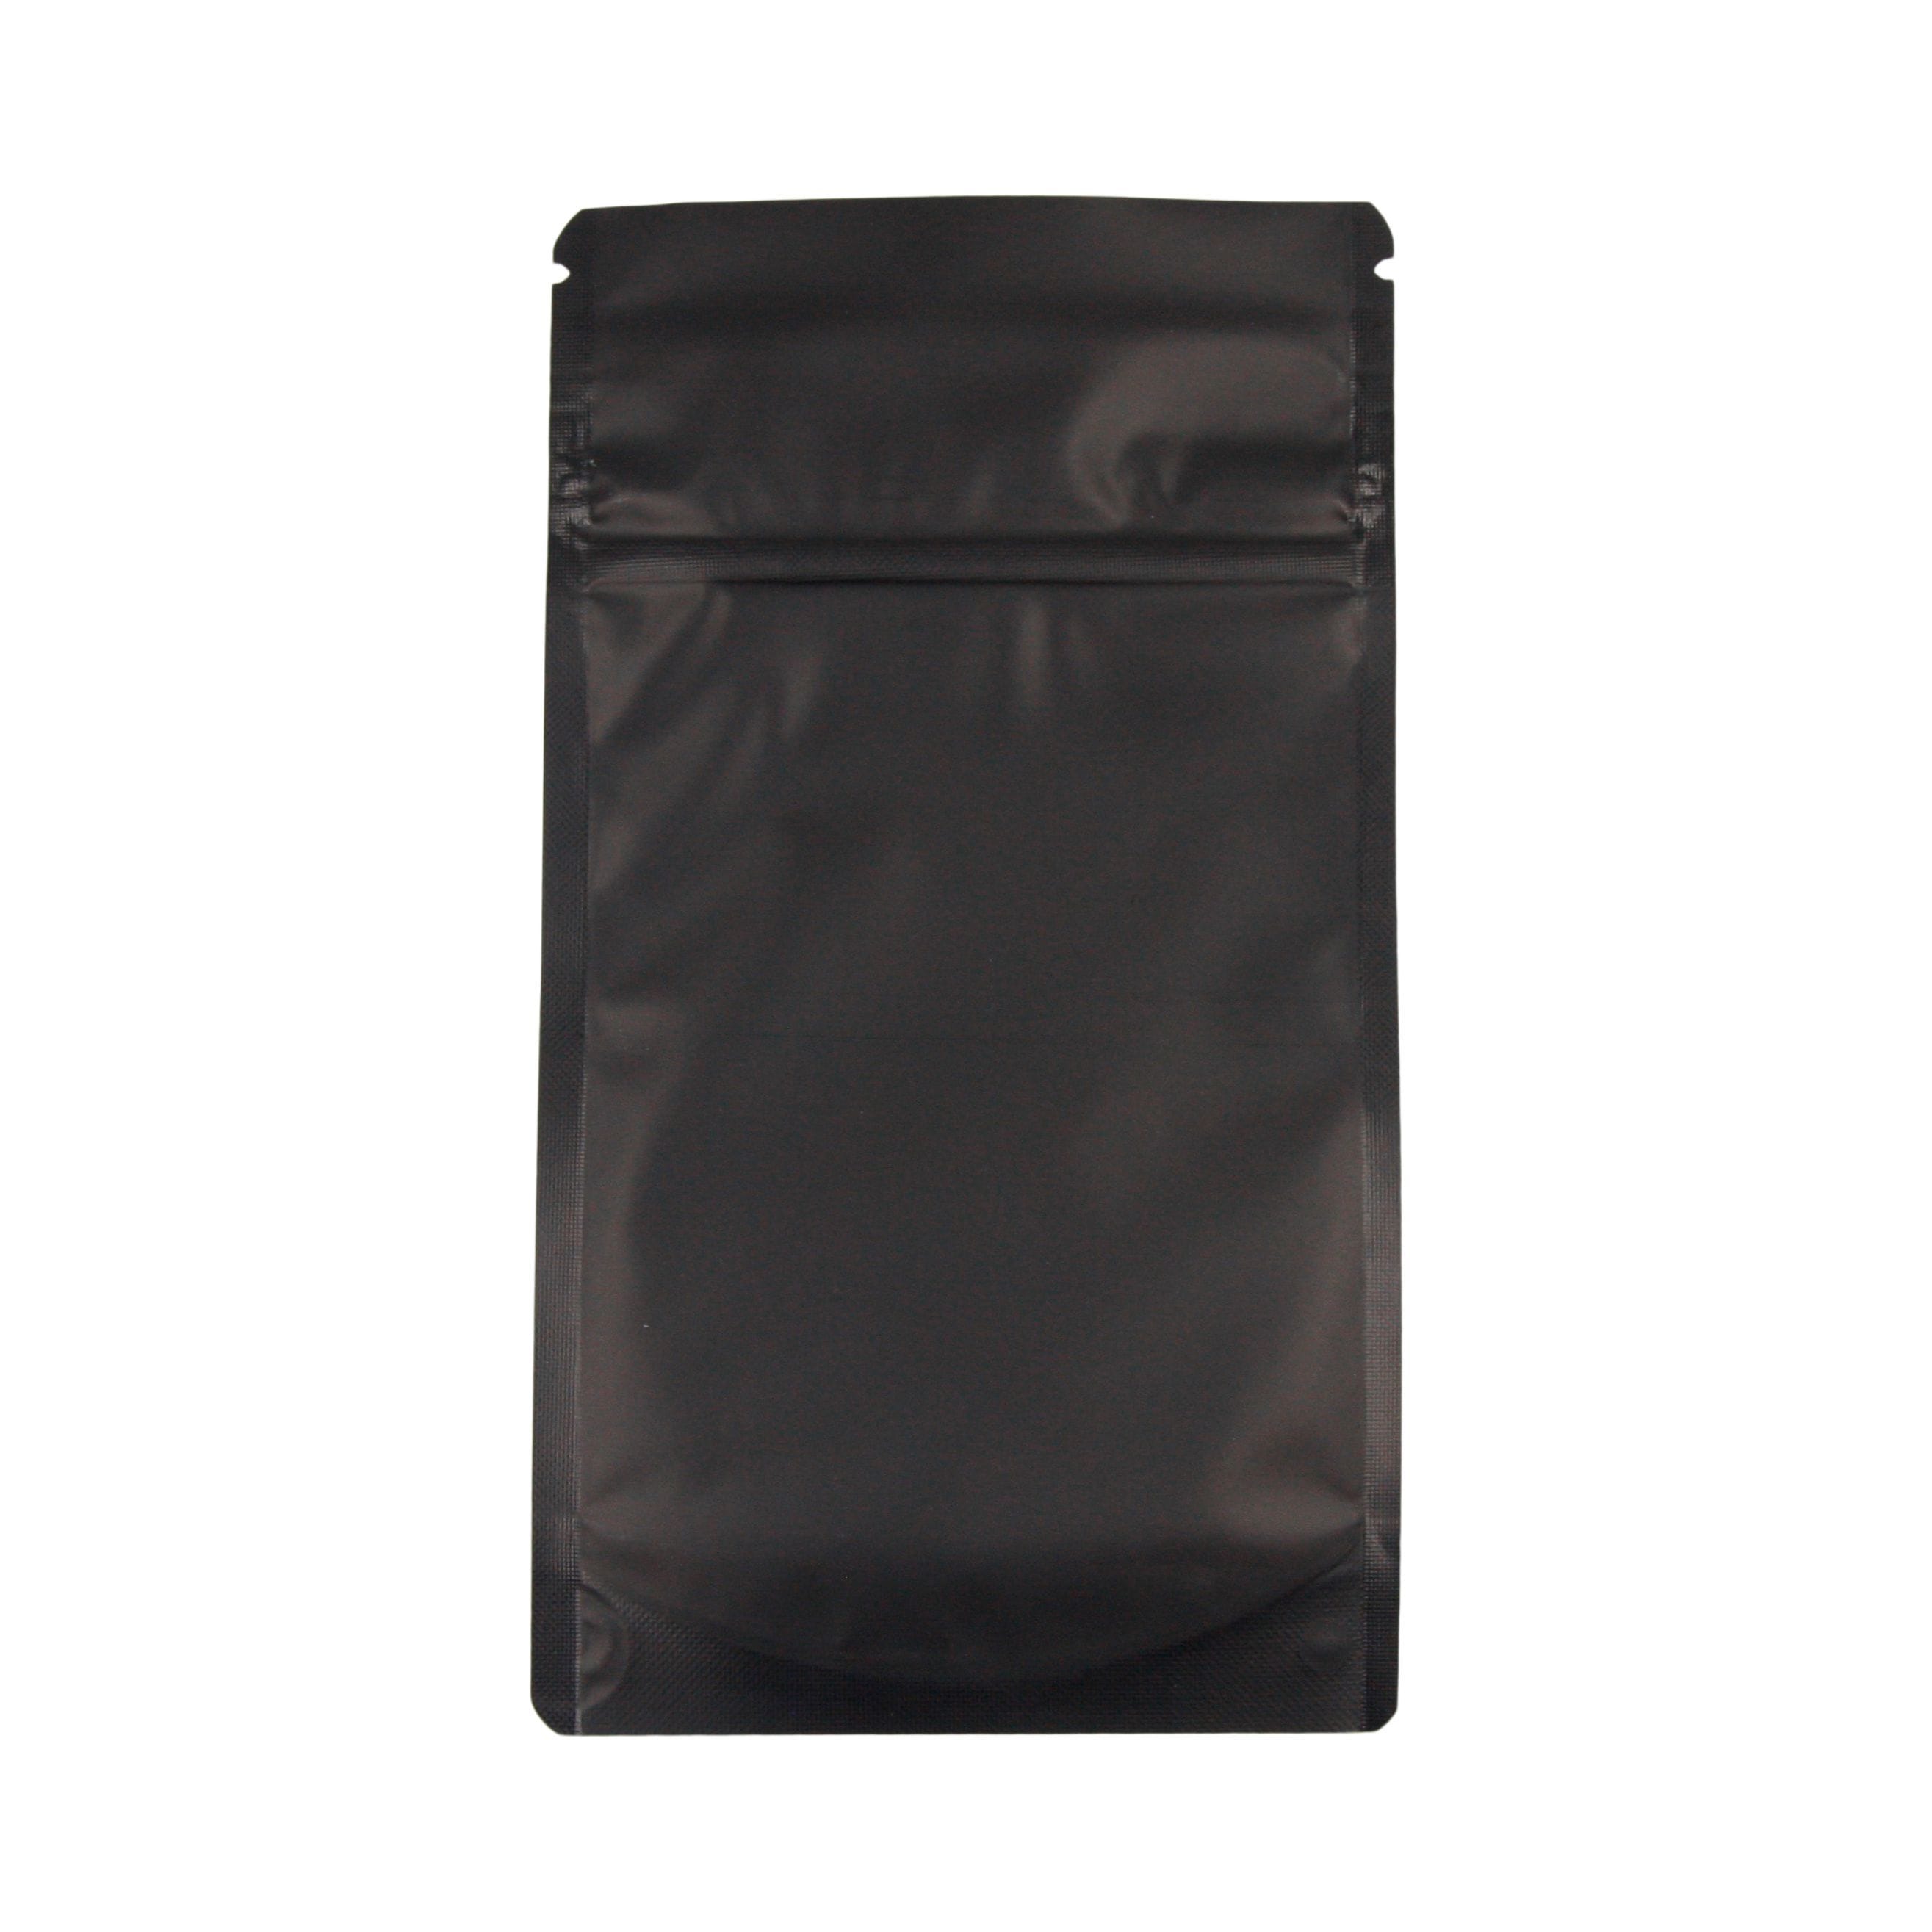 Bag King Child-Resistant Opaque Mylar Bag | 1/4th oz